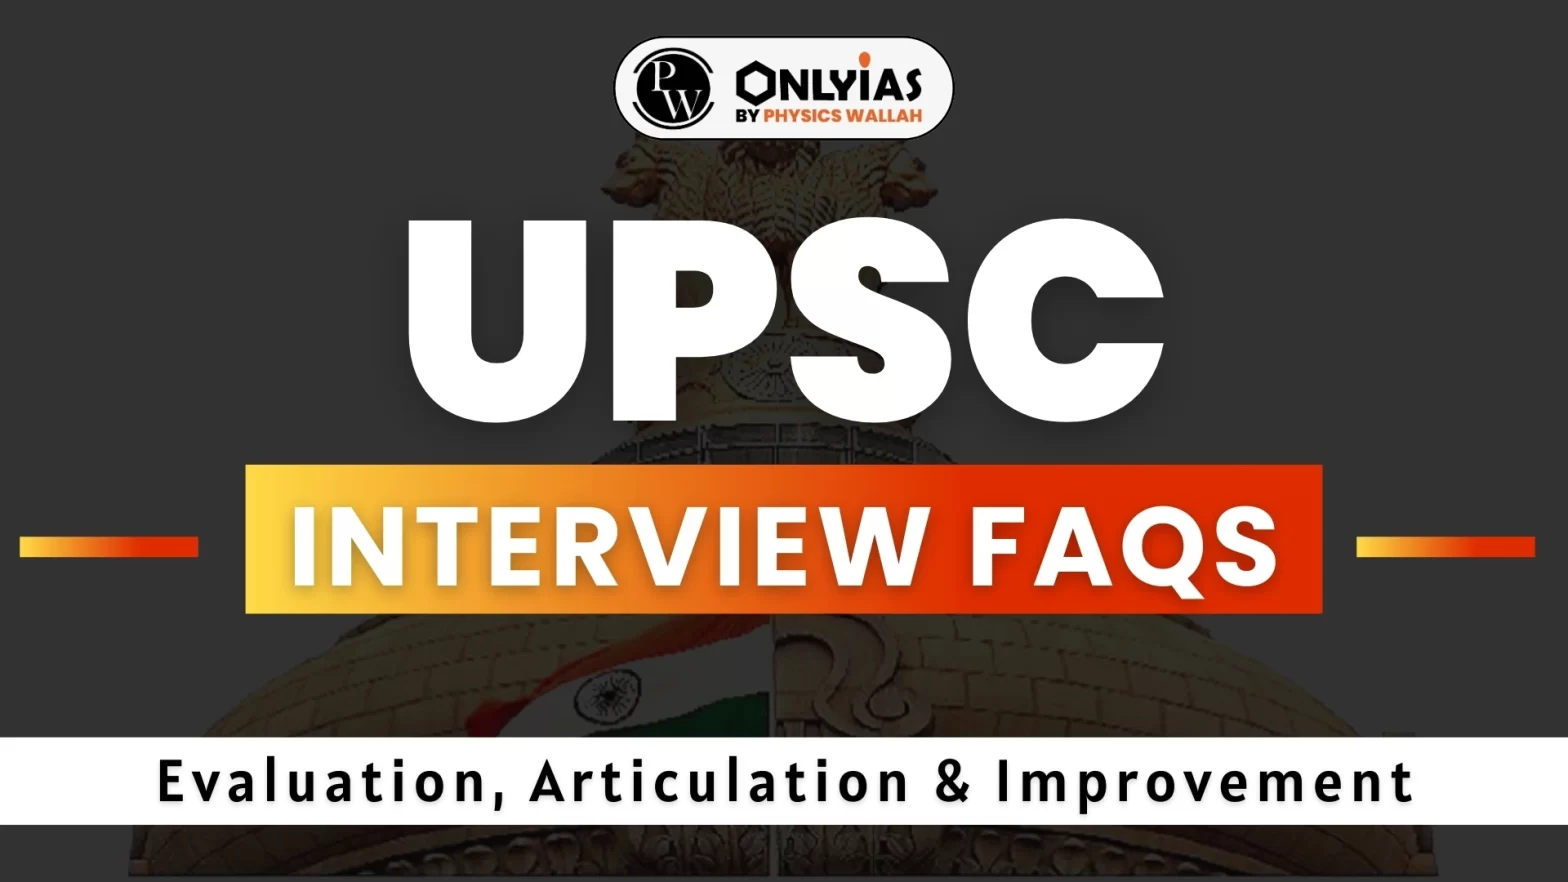 UPSC Interview FAQs: Evaluation, Articulation & Improvement